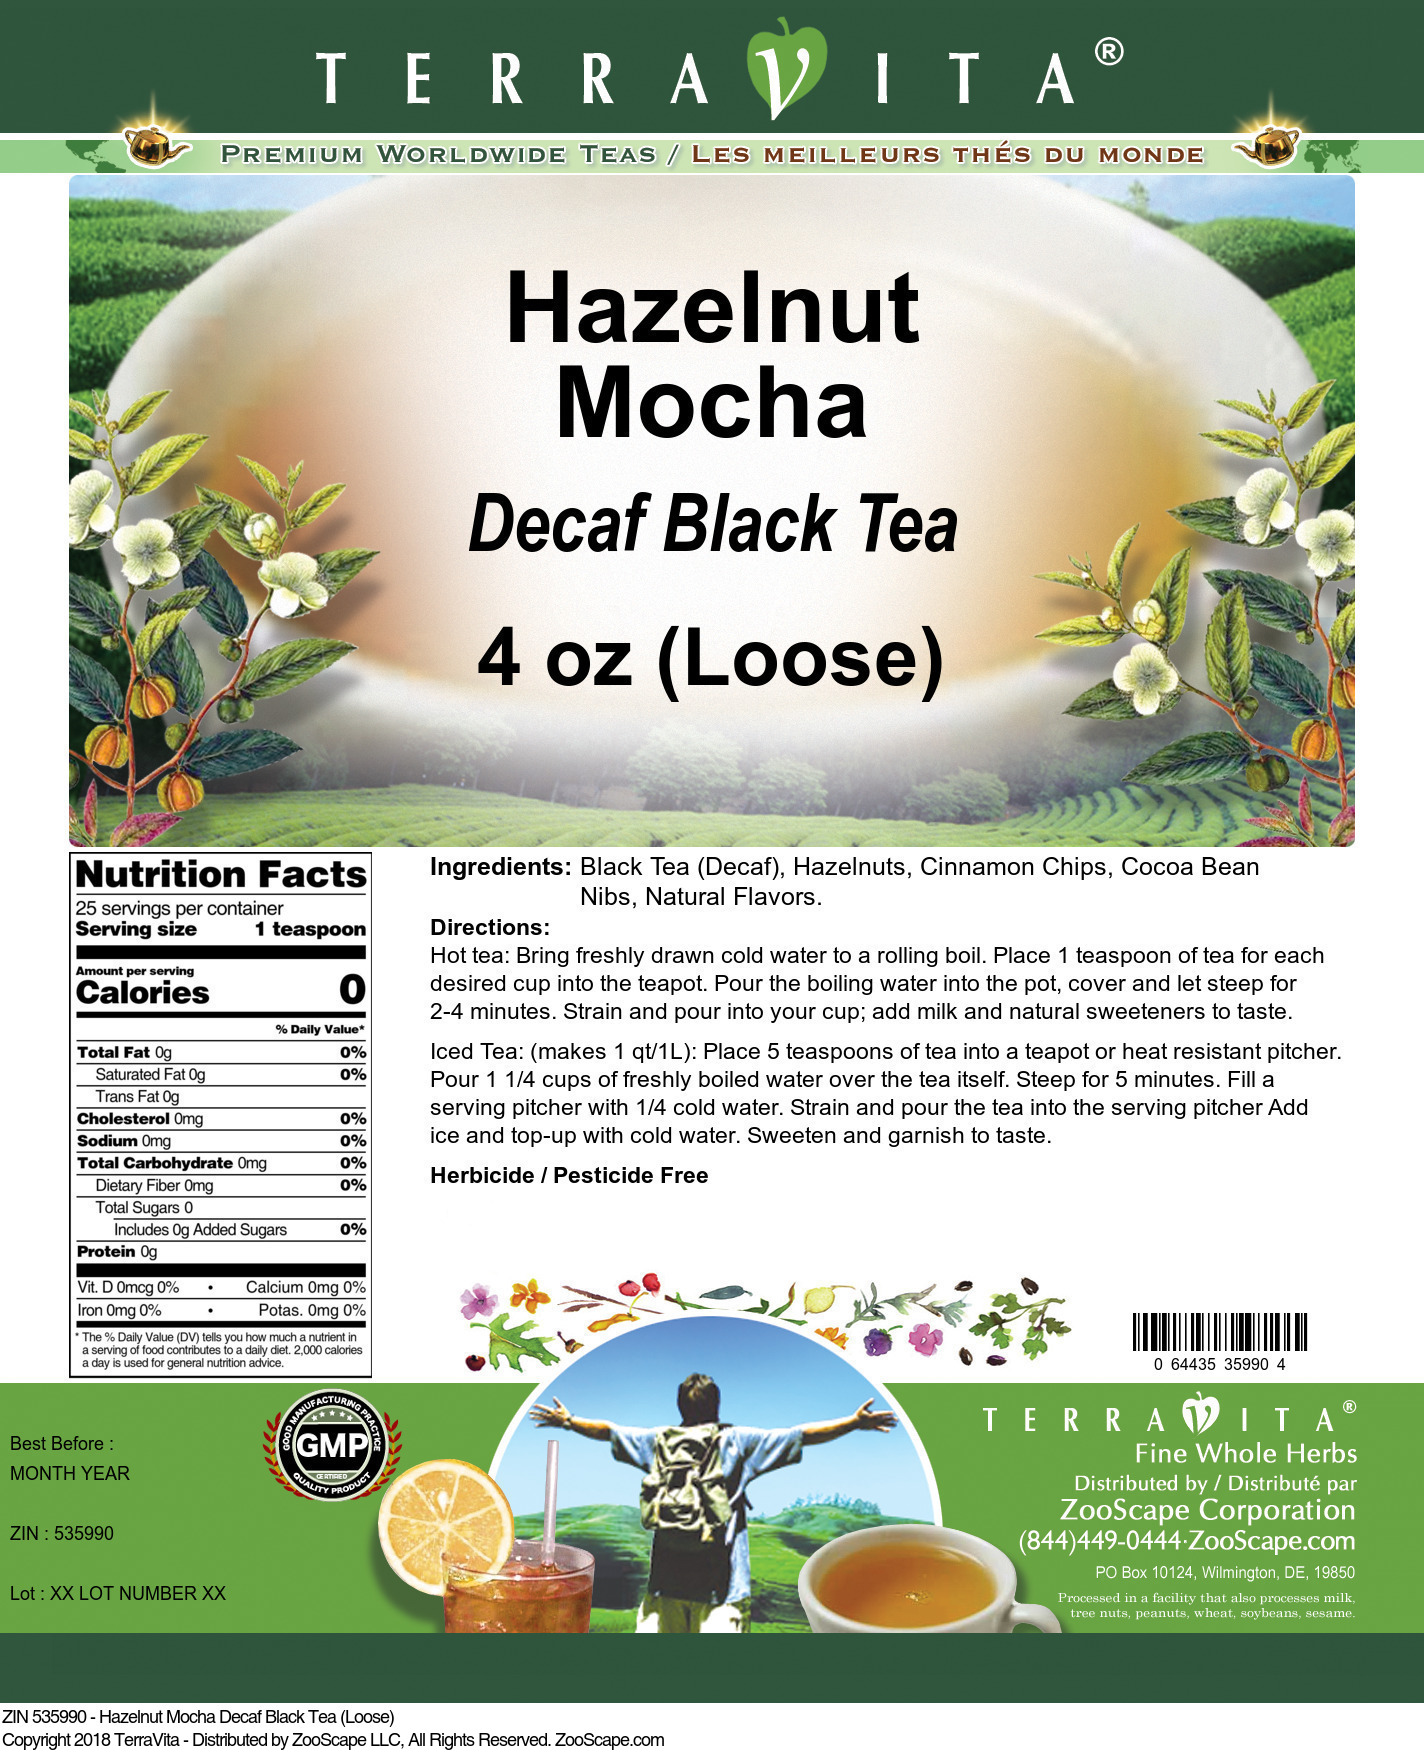 Hazelnut Mocha Decaf Black Tea (Loose) - Label